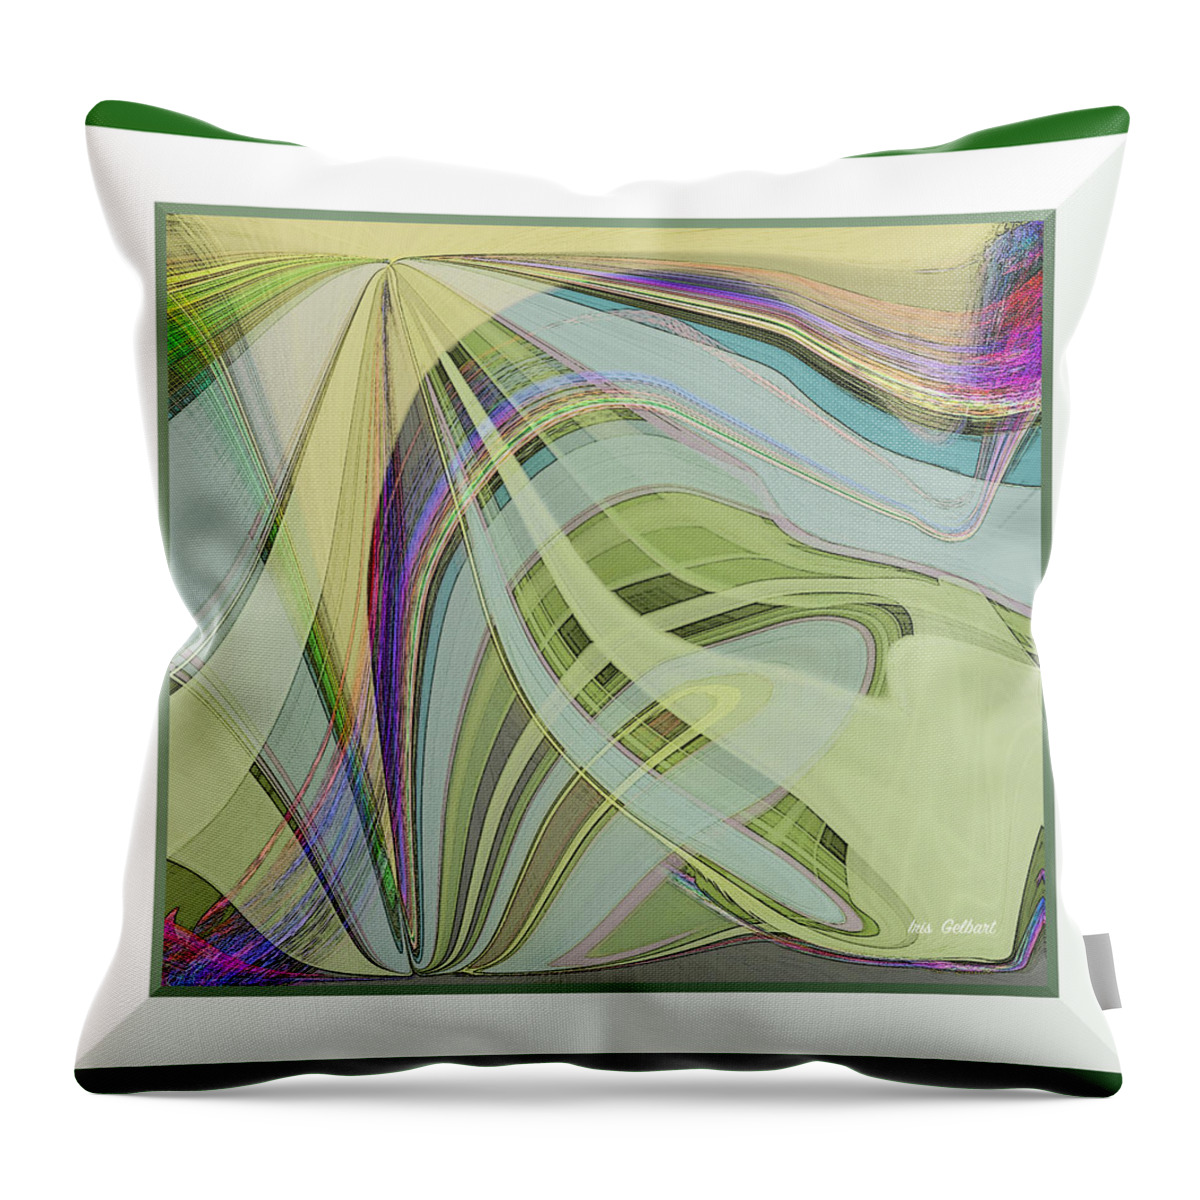 Abstract Throw Pillow featuring the digital art Flash by Iris Gelbart